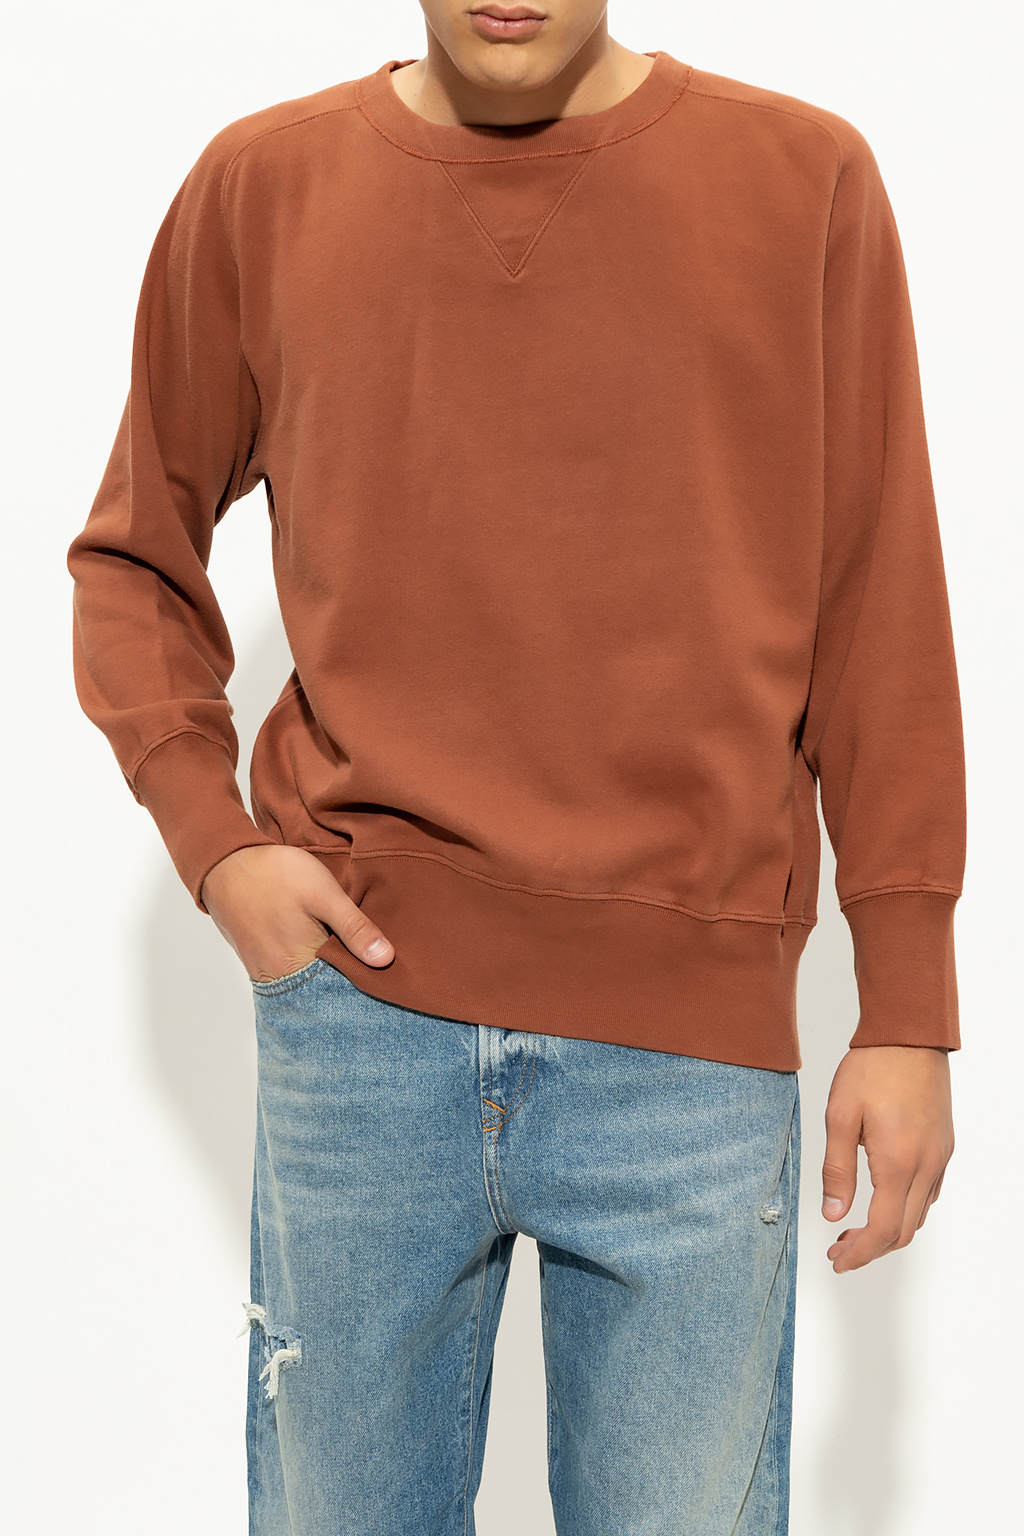 Brown Sweatshirt 'Vintage Clothing' collection Levi's - Vitkac KR